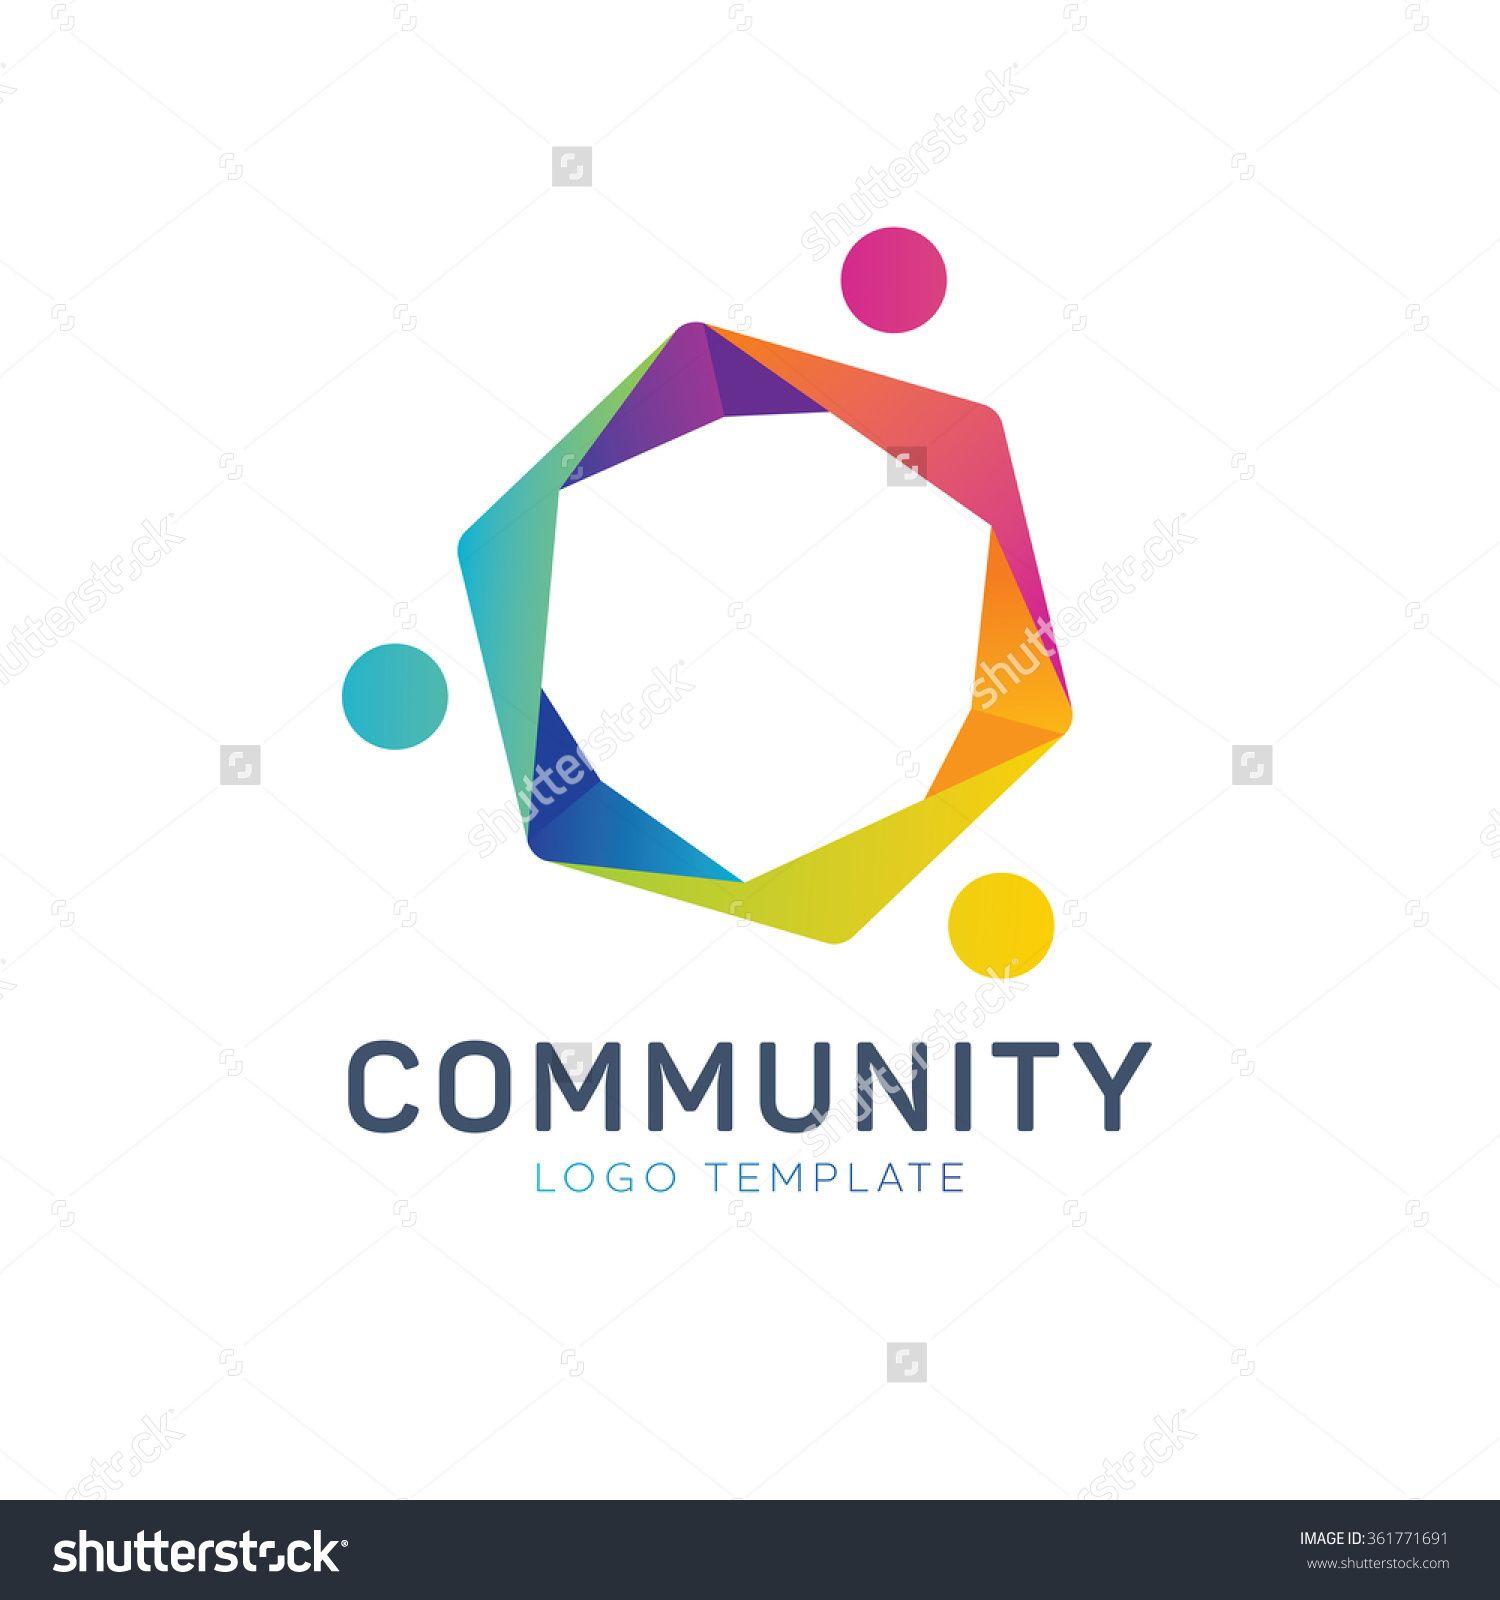 Social Logo - Community logo. Teamwork logo. Social logo. Partnership logo